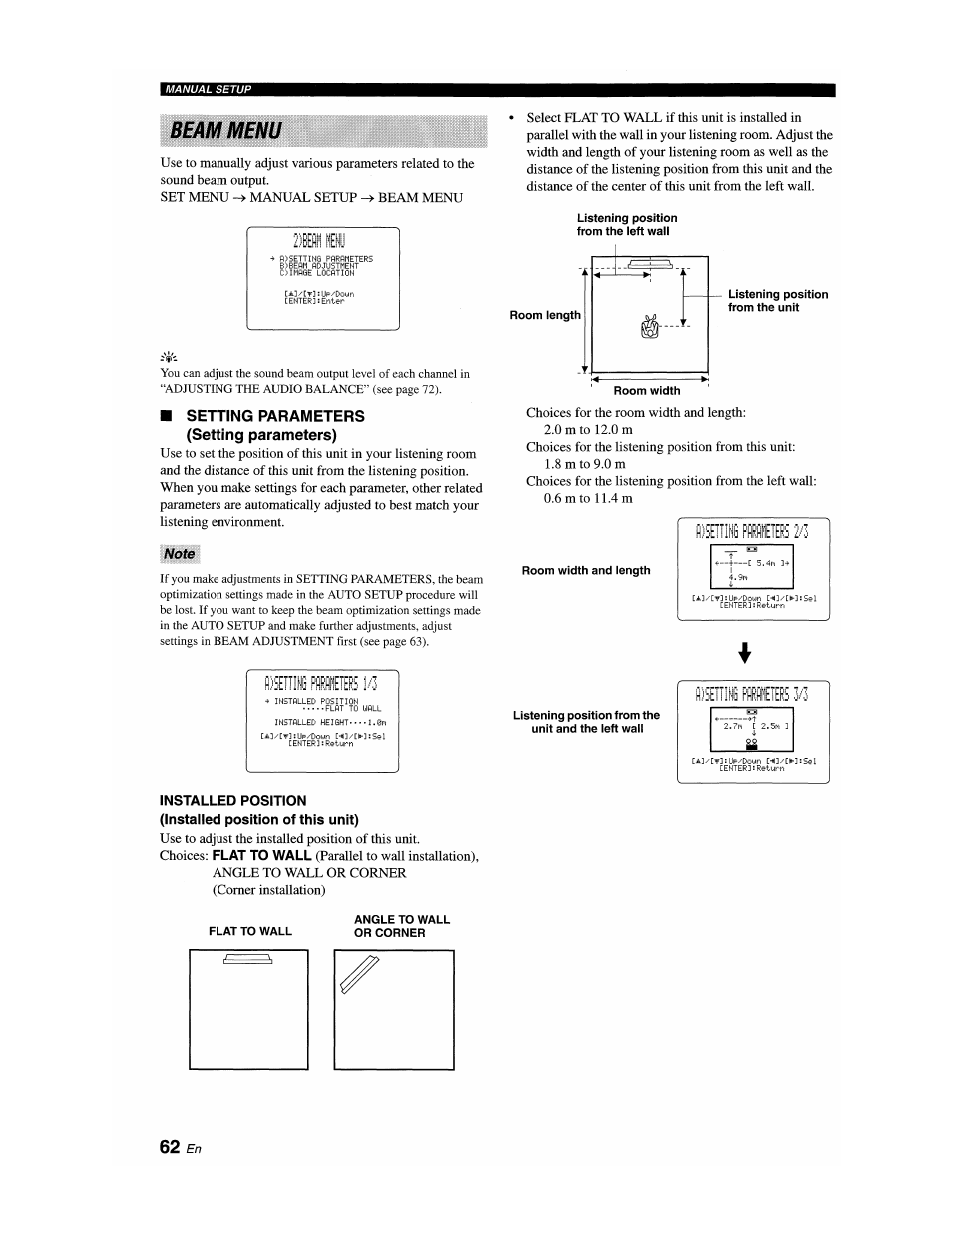 Beam menu, Setting parameters (setting parameters), Fiiseiil plfitflee 1/3 | Yamaha YSP-1100 User Manual | Page 66 / 104